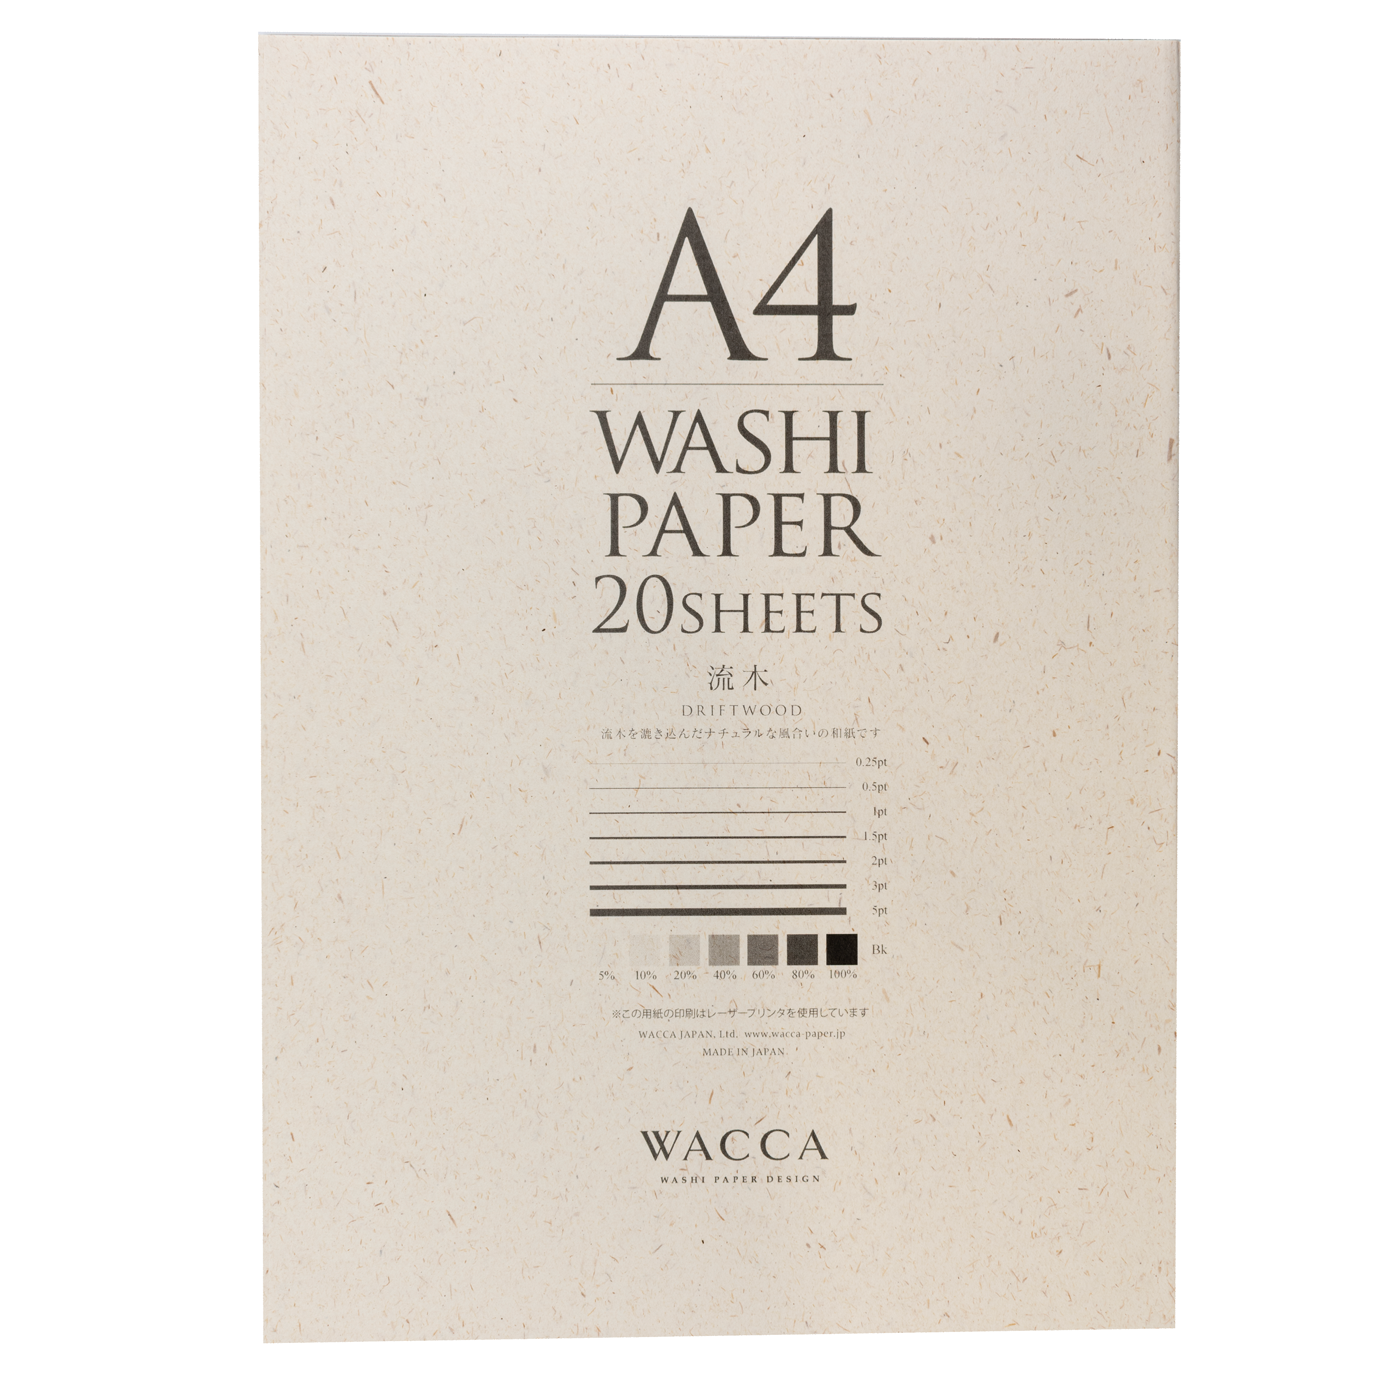 WACCO Washi Paper - Drift Wood - A4